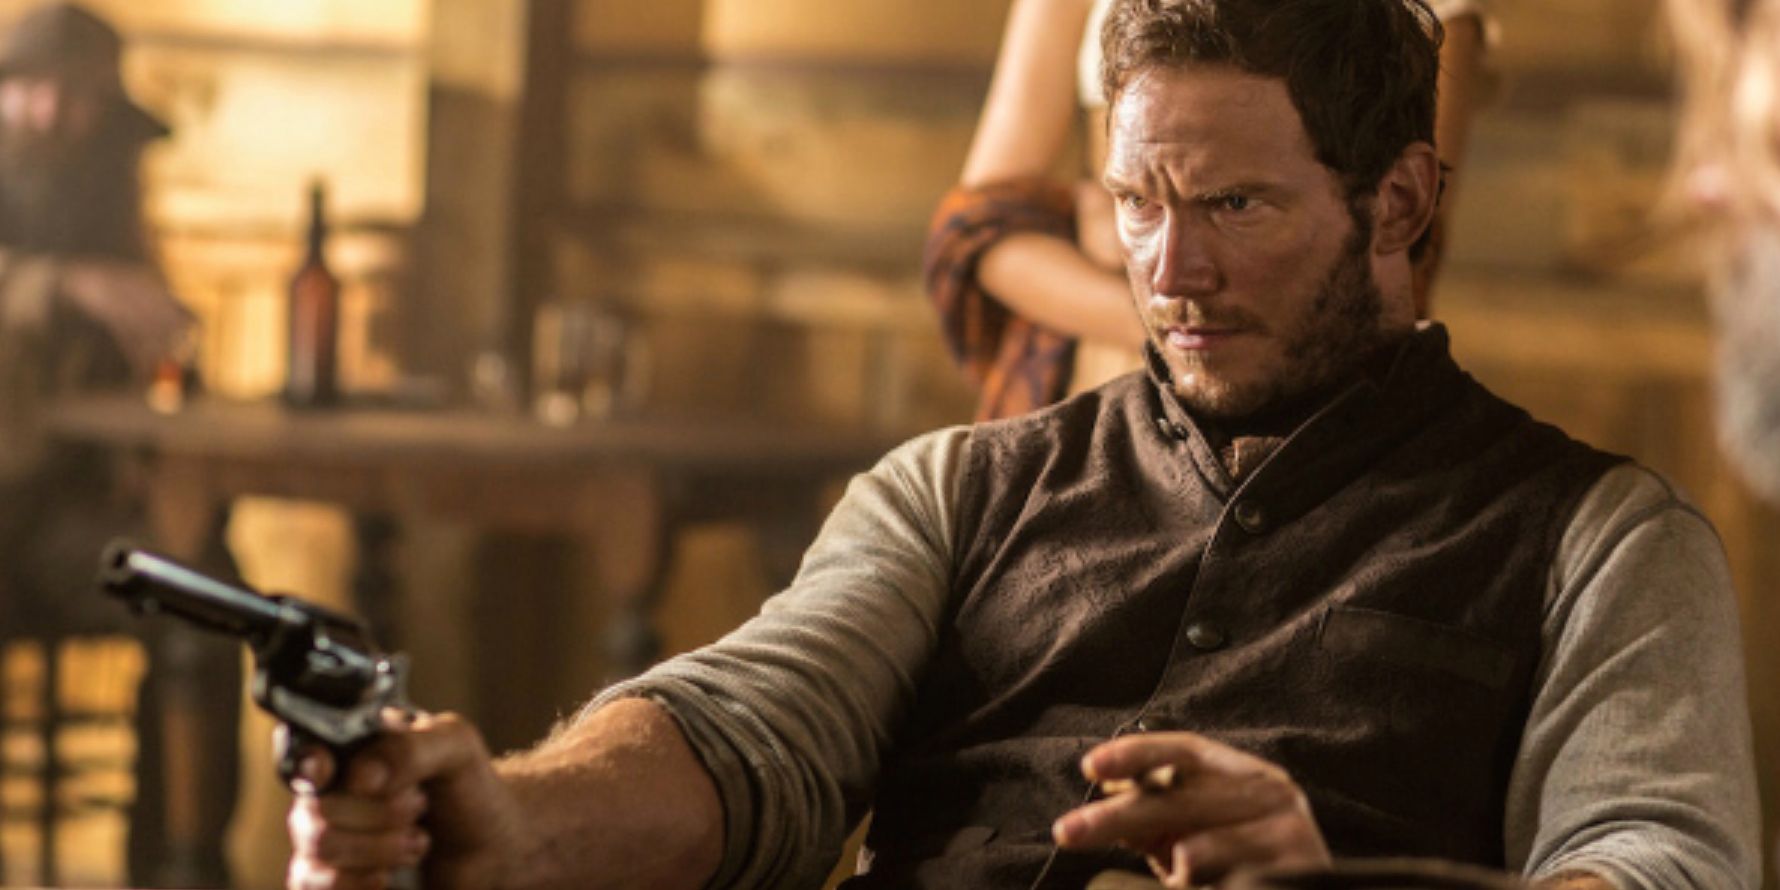 Chris Pratt As Joshua sitting with gun in The Magnificent Seven